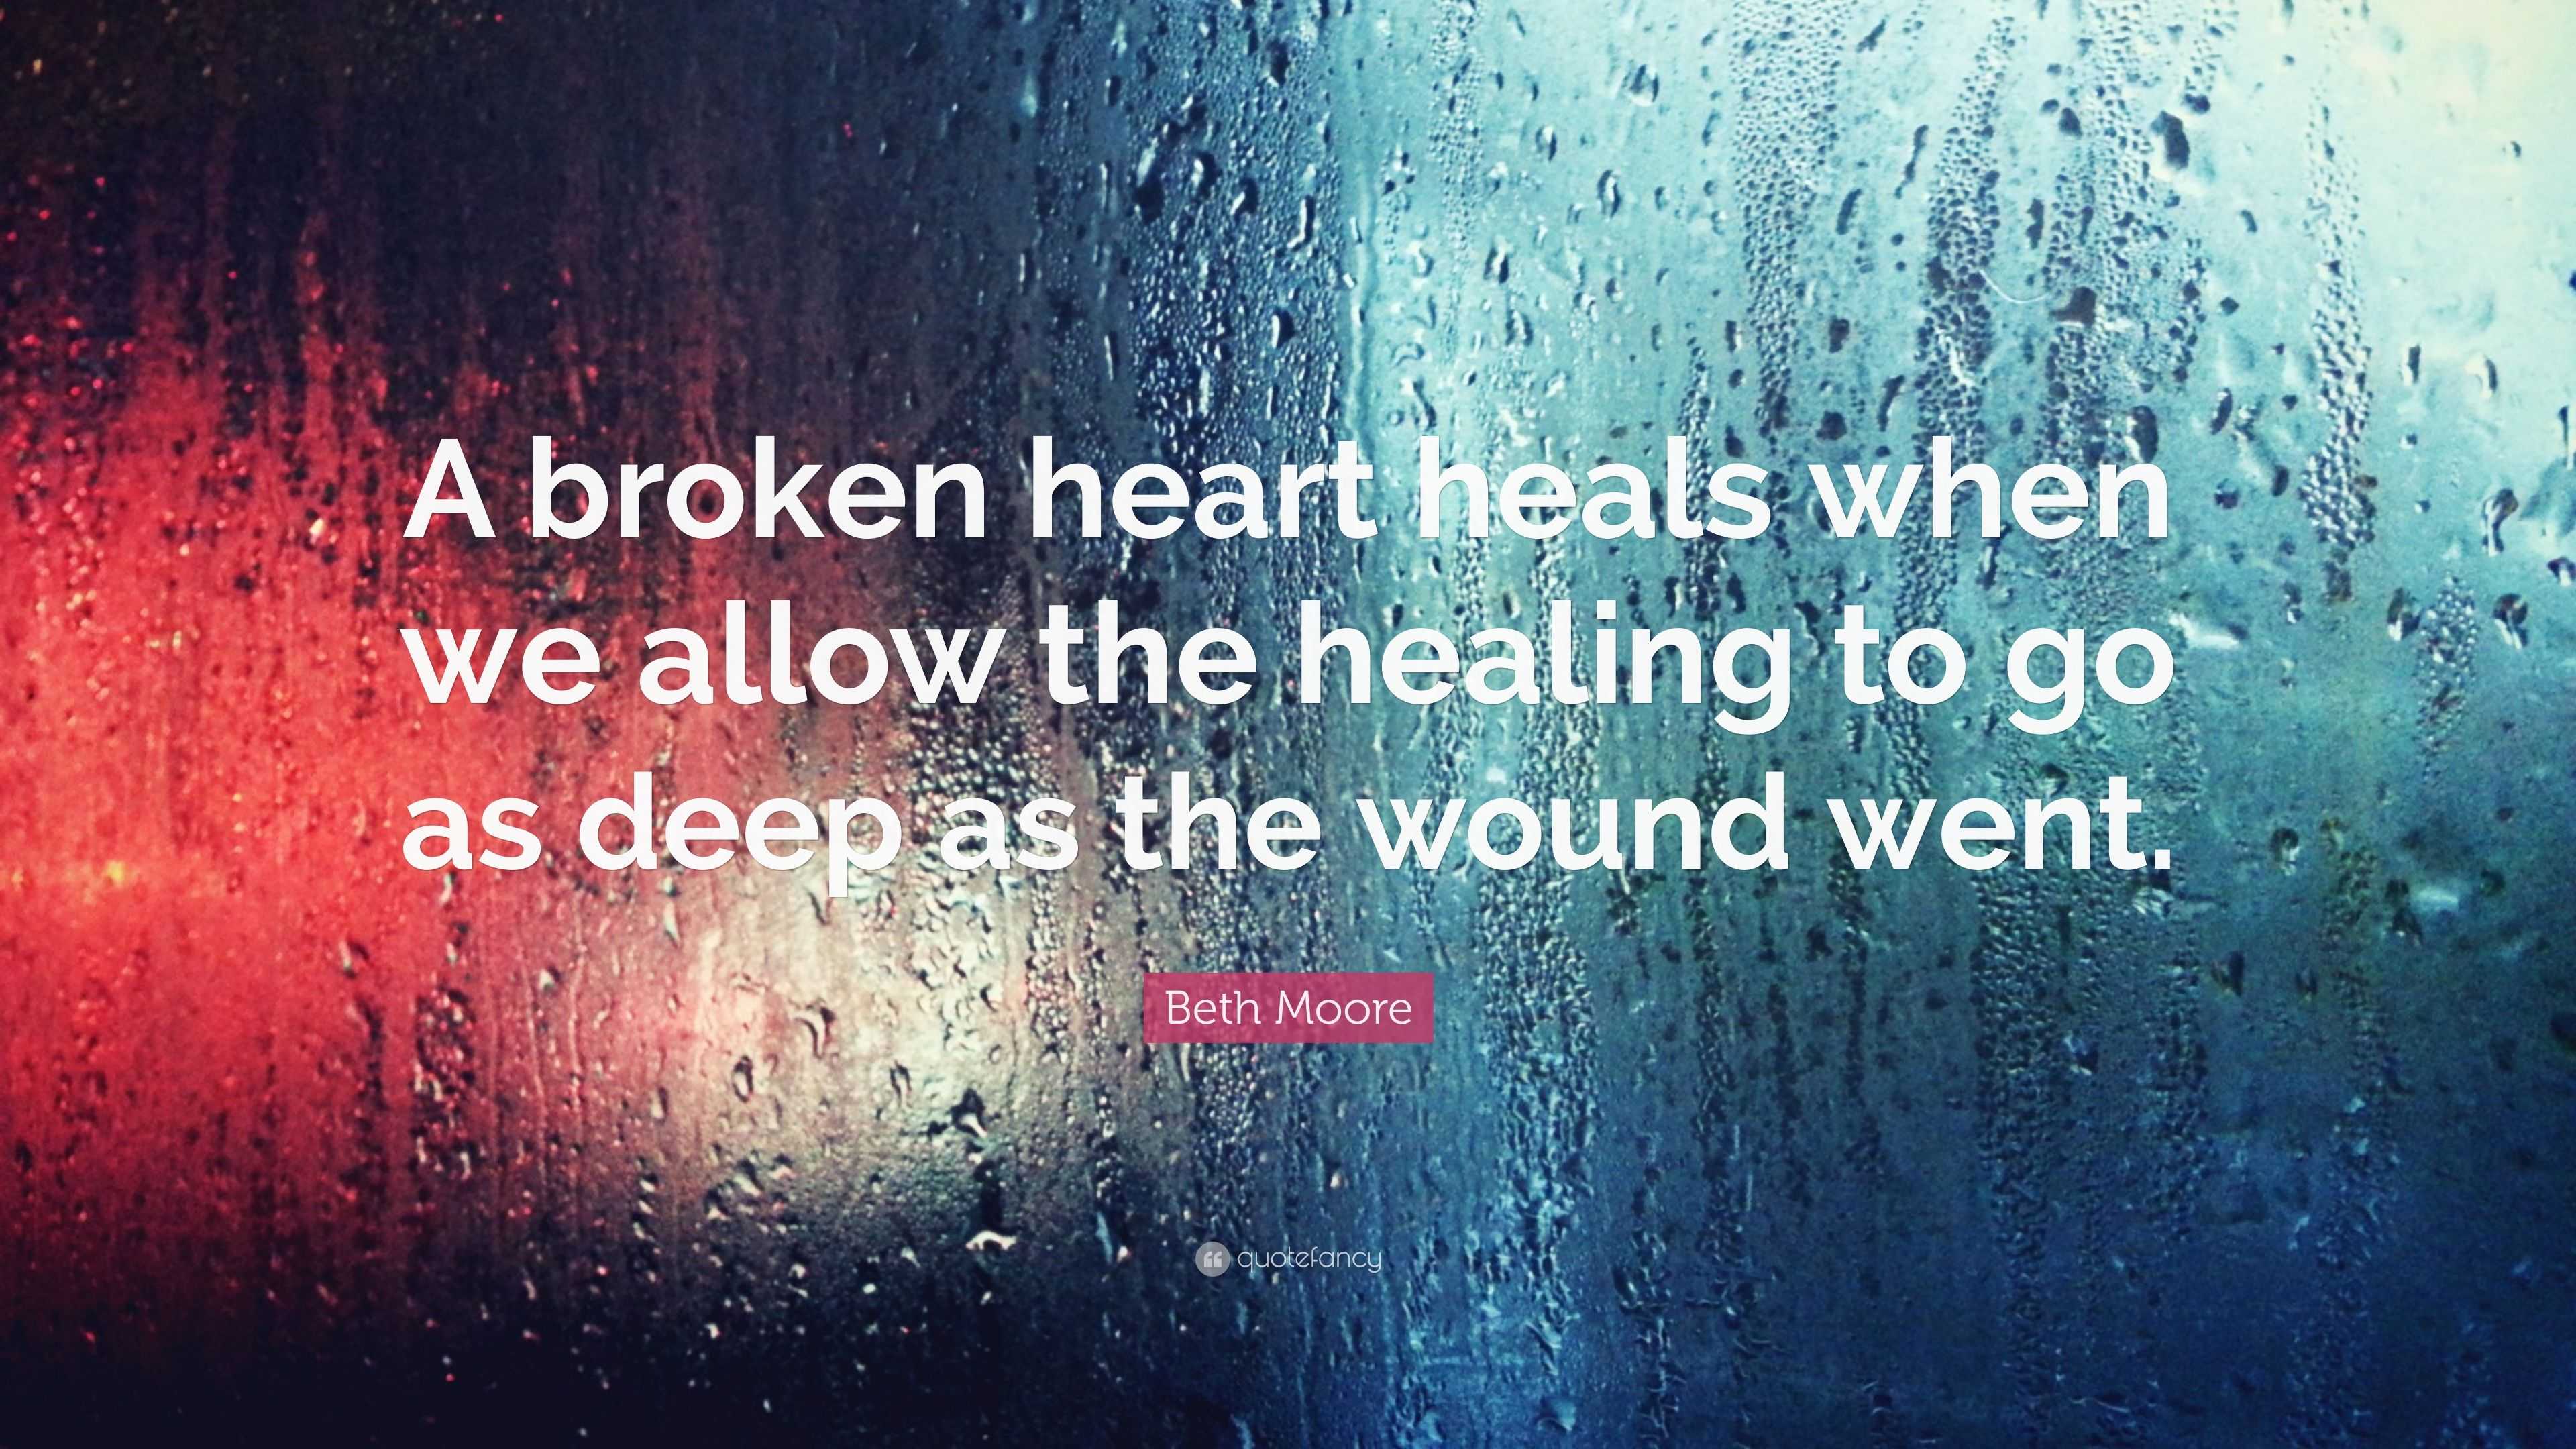 Beth Moore Quote: “A broken heart heals when we allow the healing to go